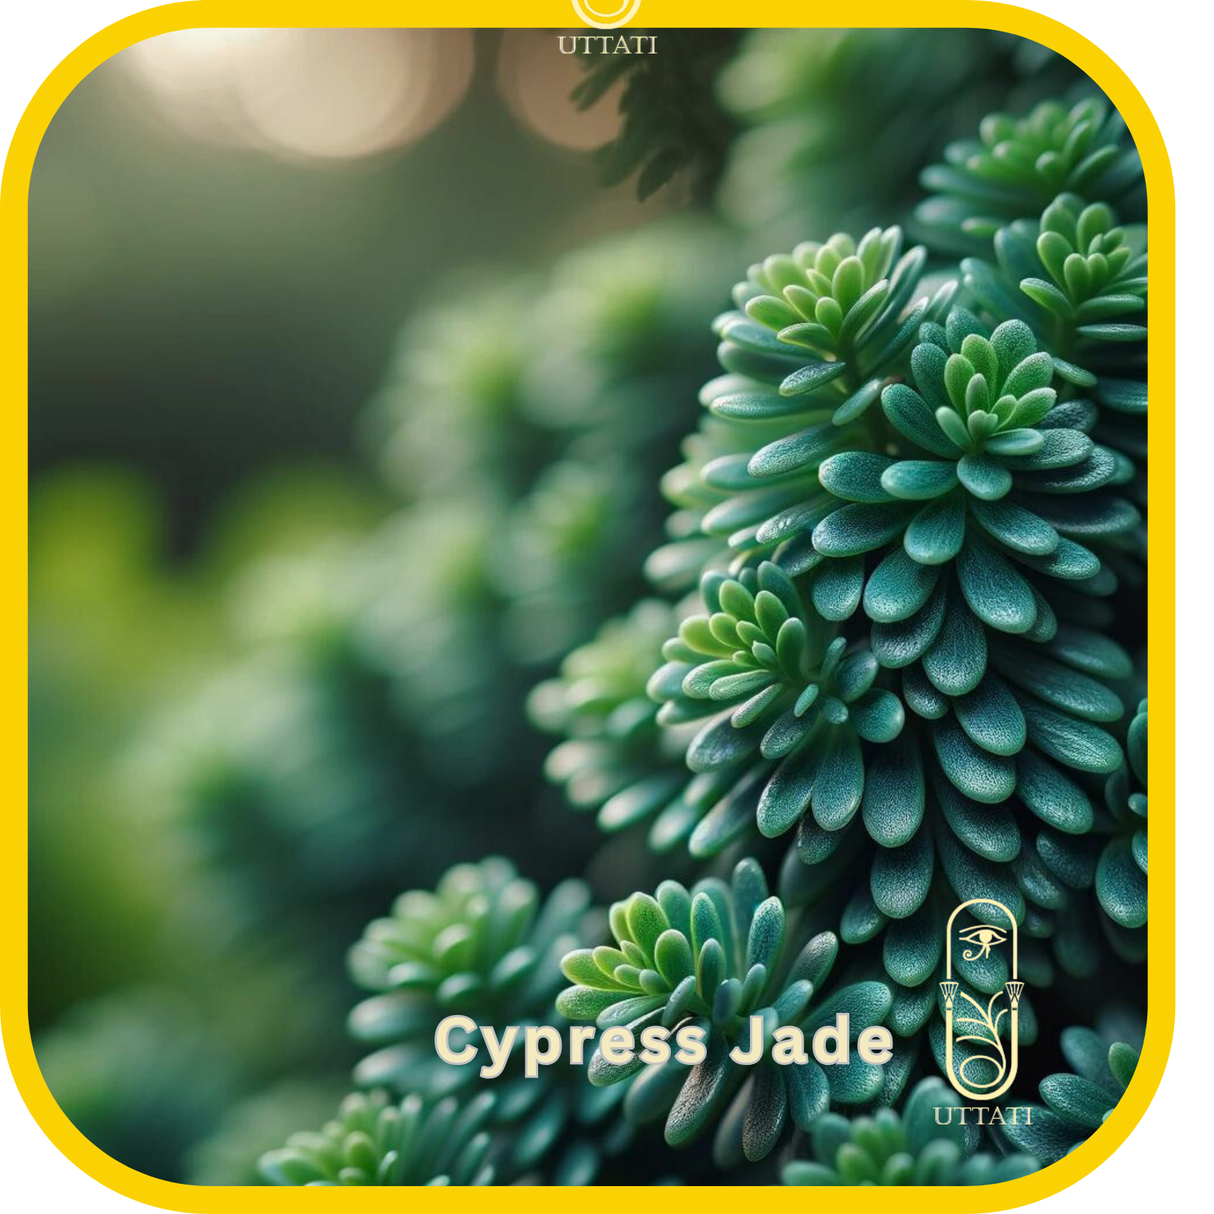 Cypress Jade